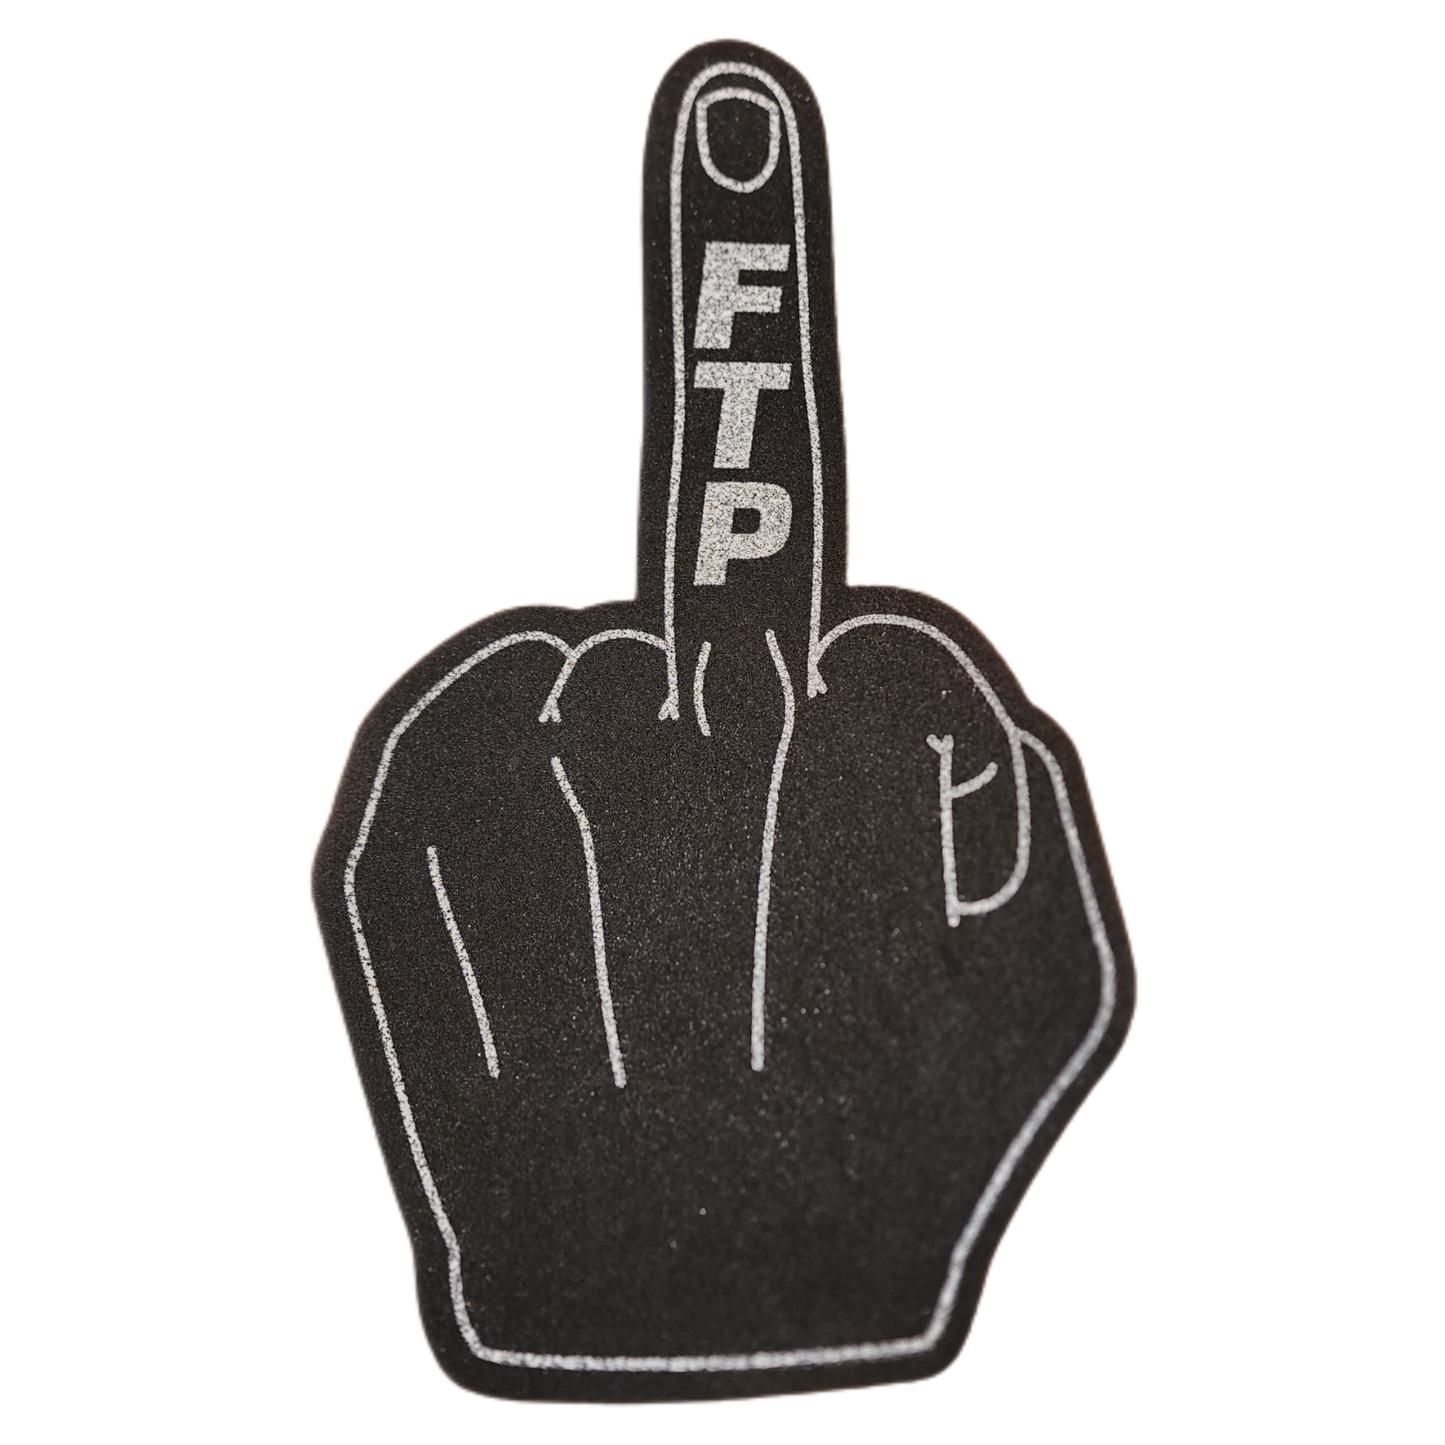 FTP - "Foam Finger" - Black